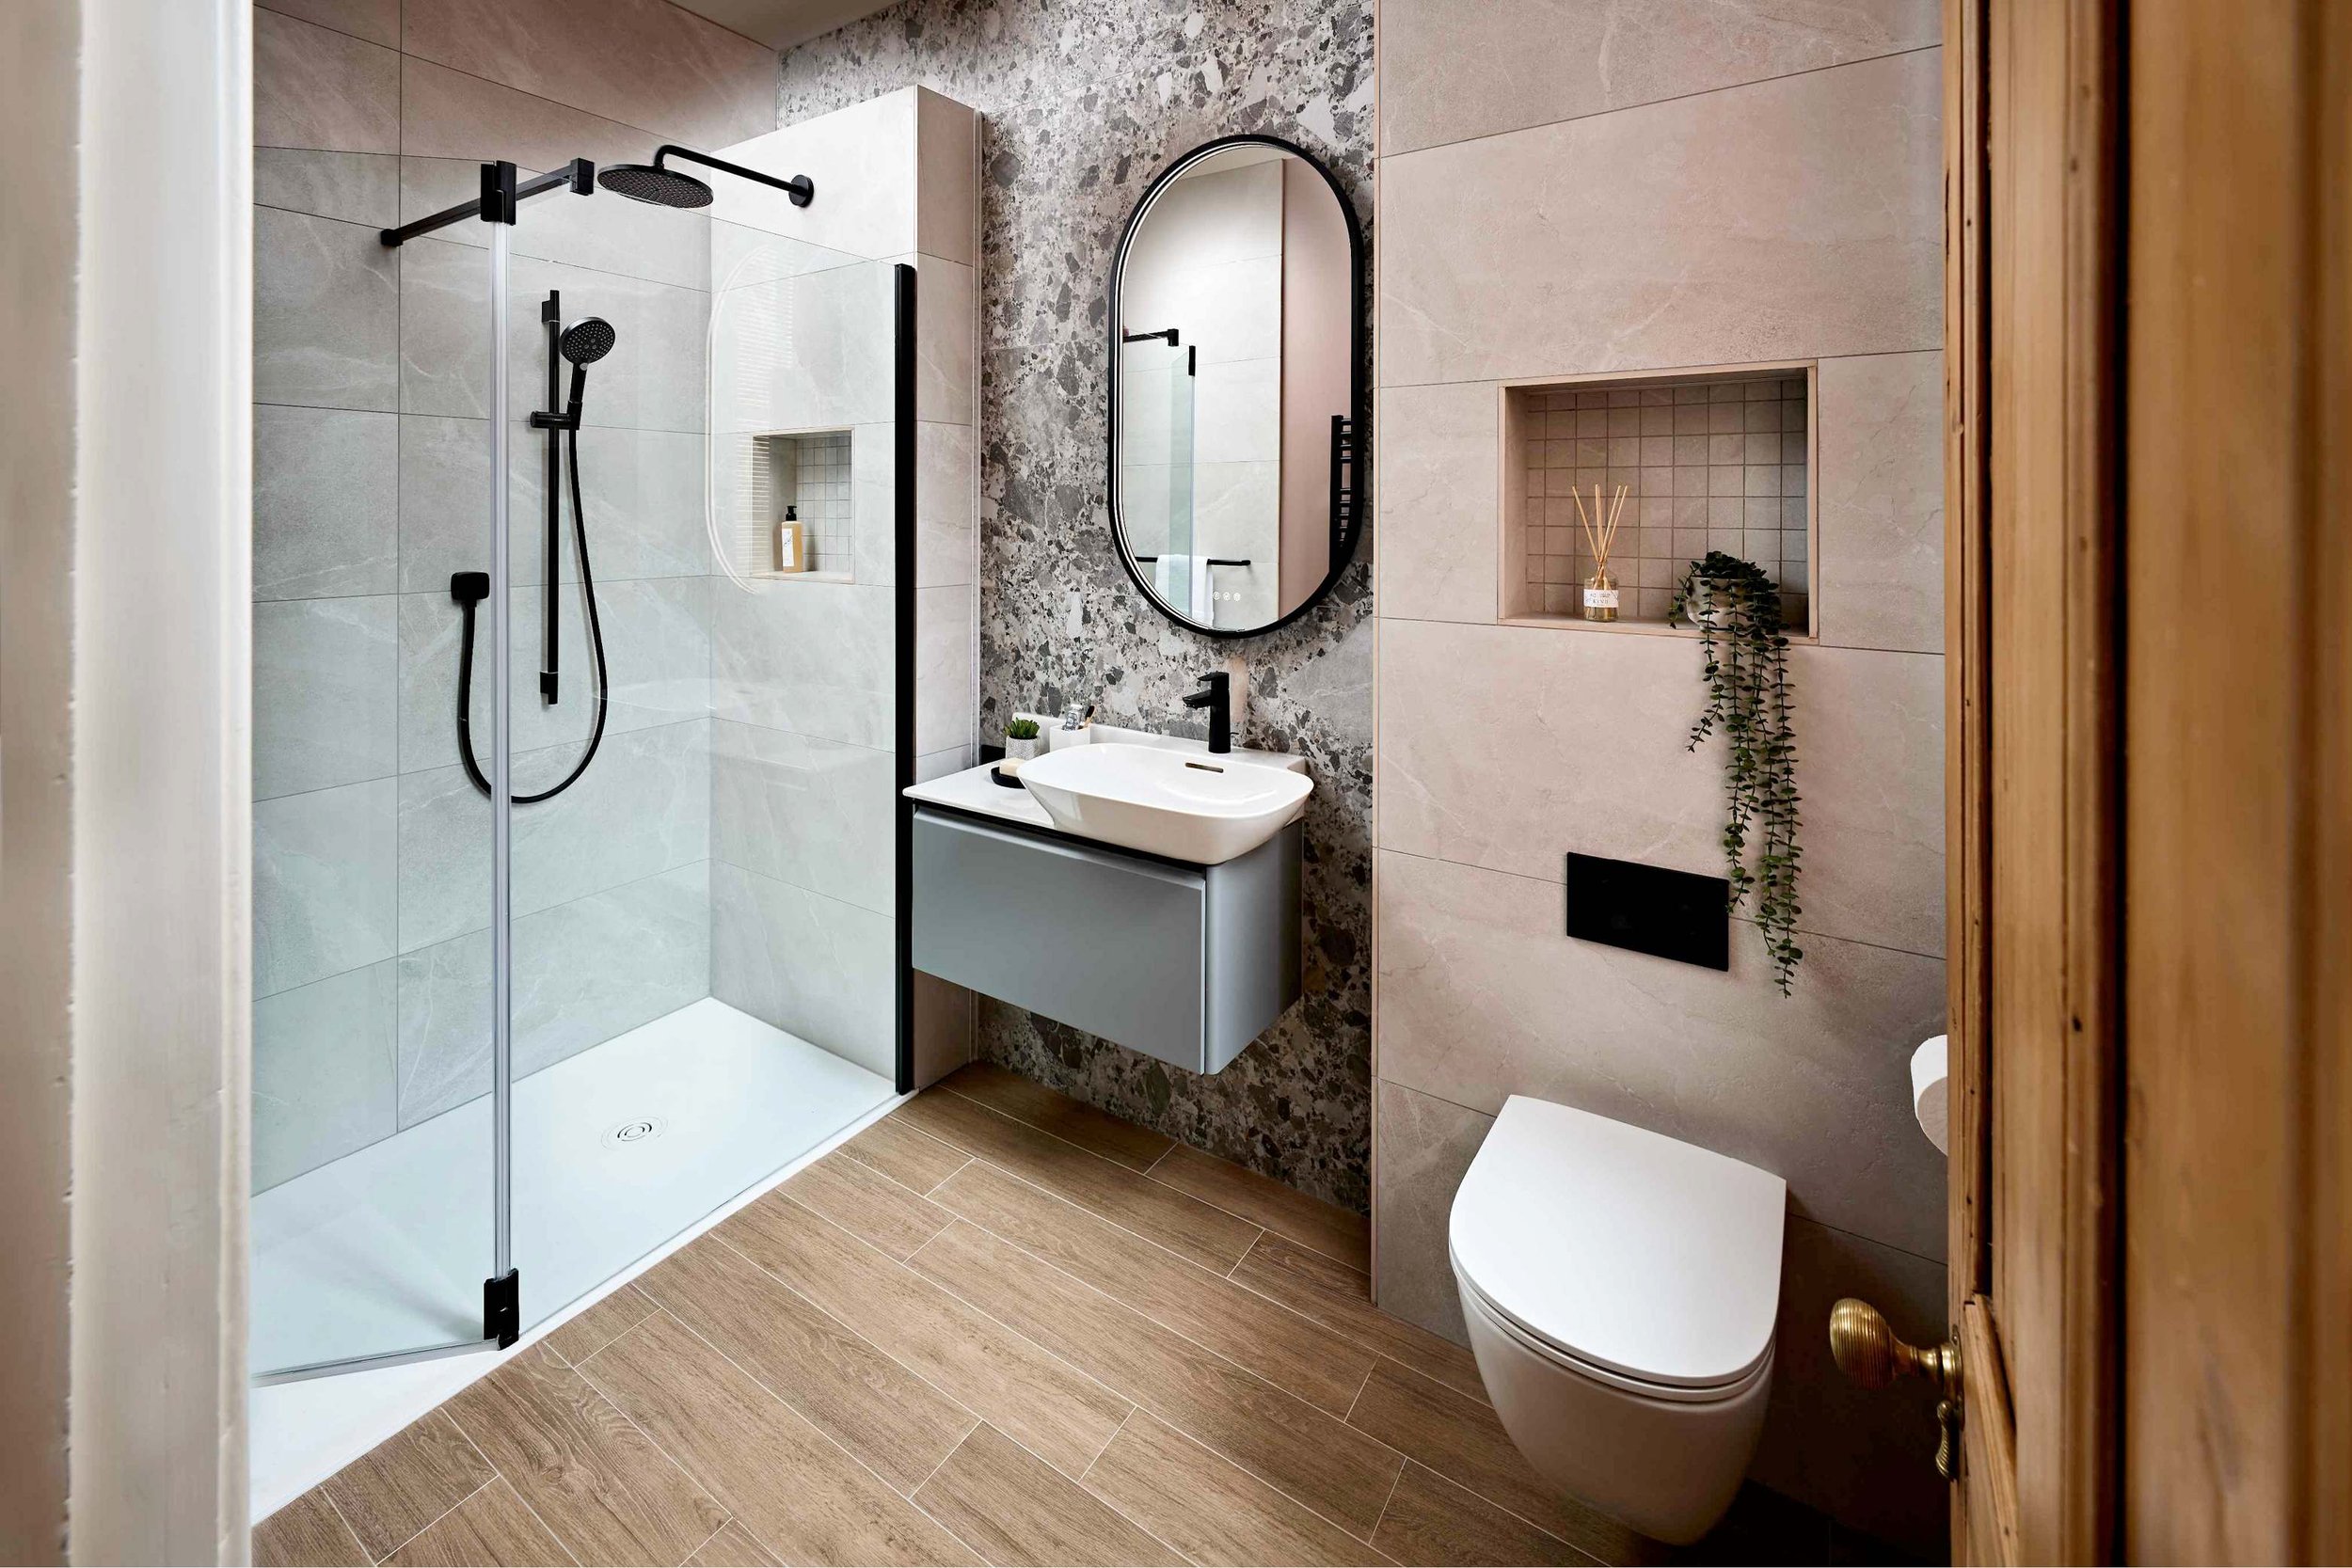 ripples-shower-room-with-terrazzo-tiles.jpg